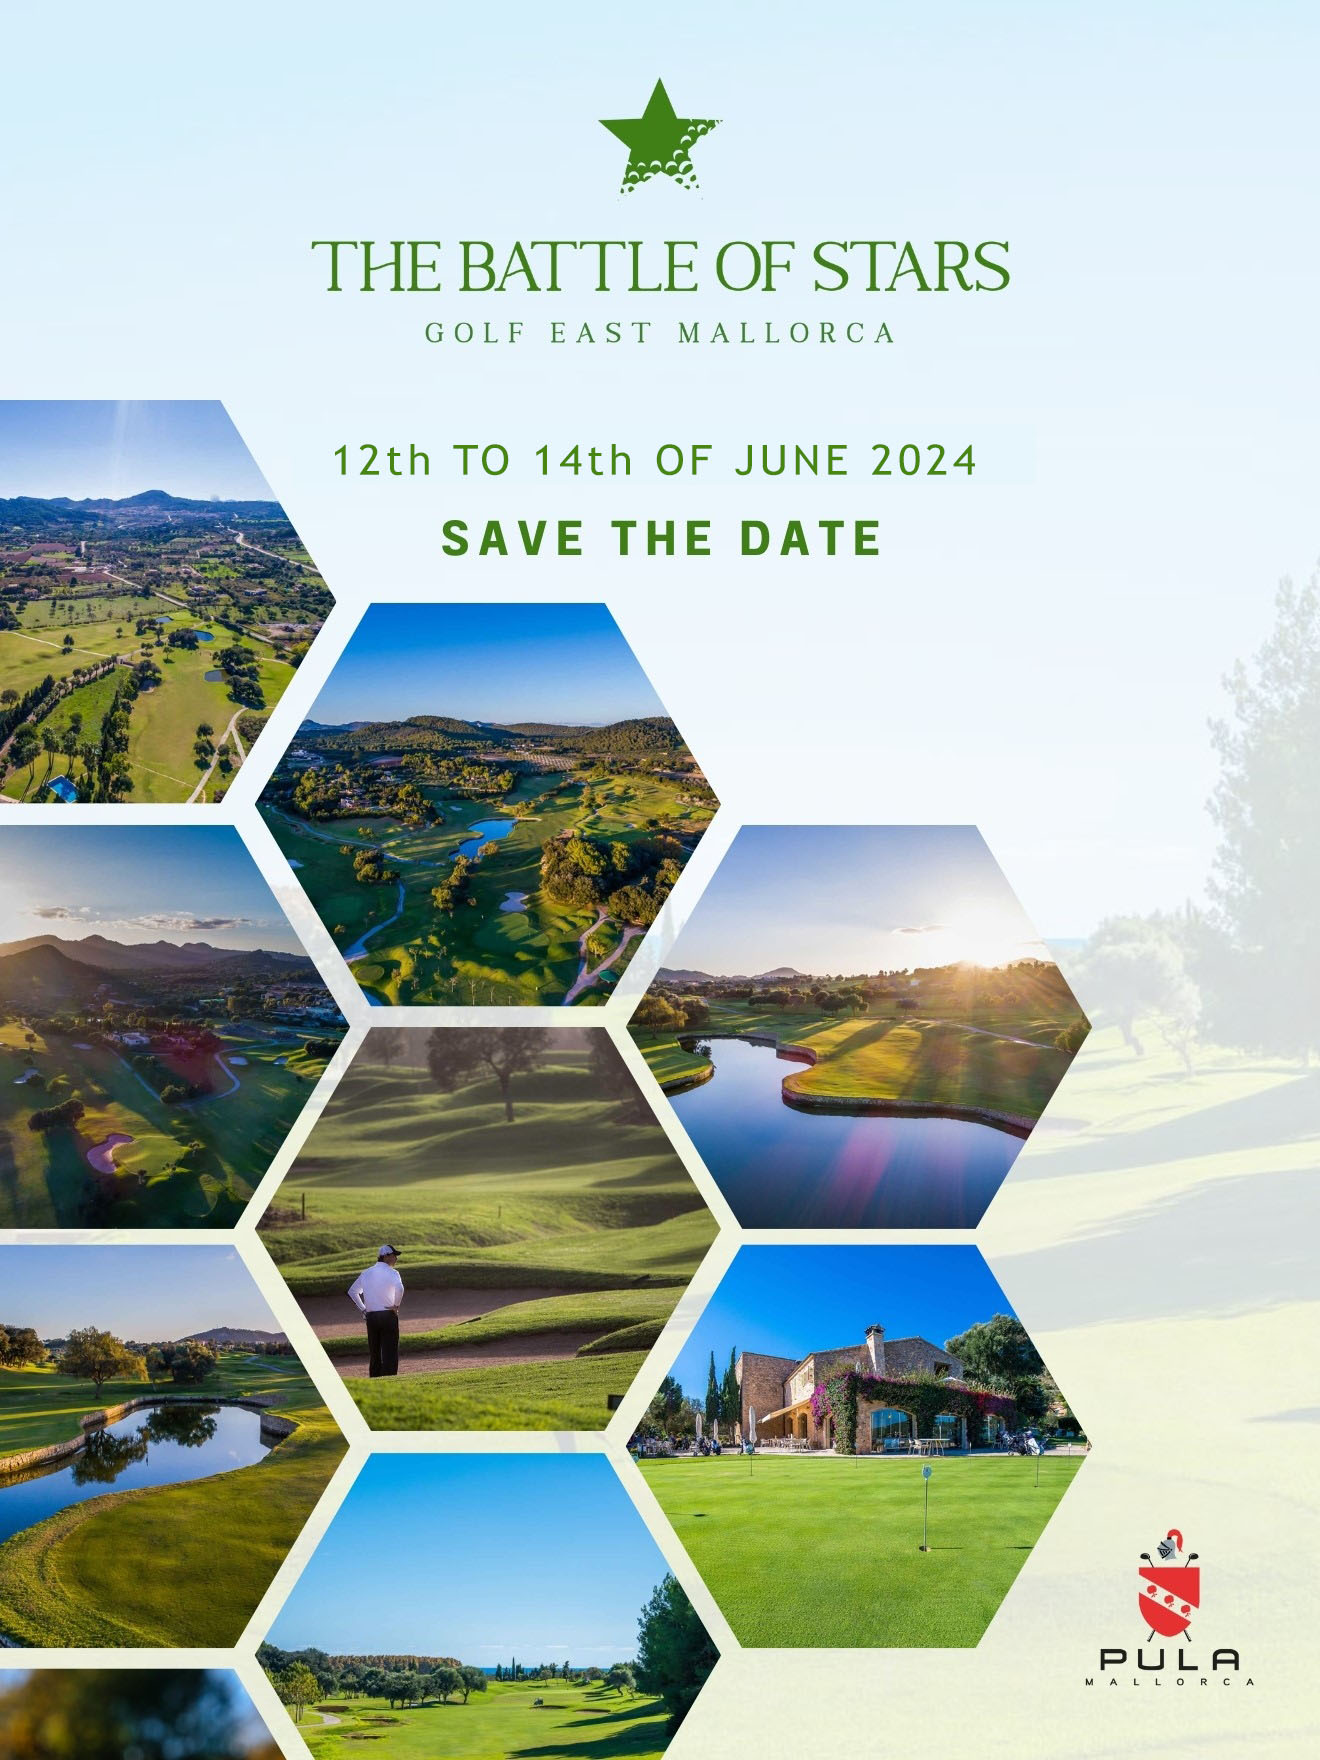 Battle of Stars 2024 golf tournament